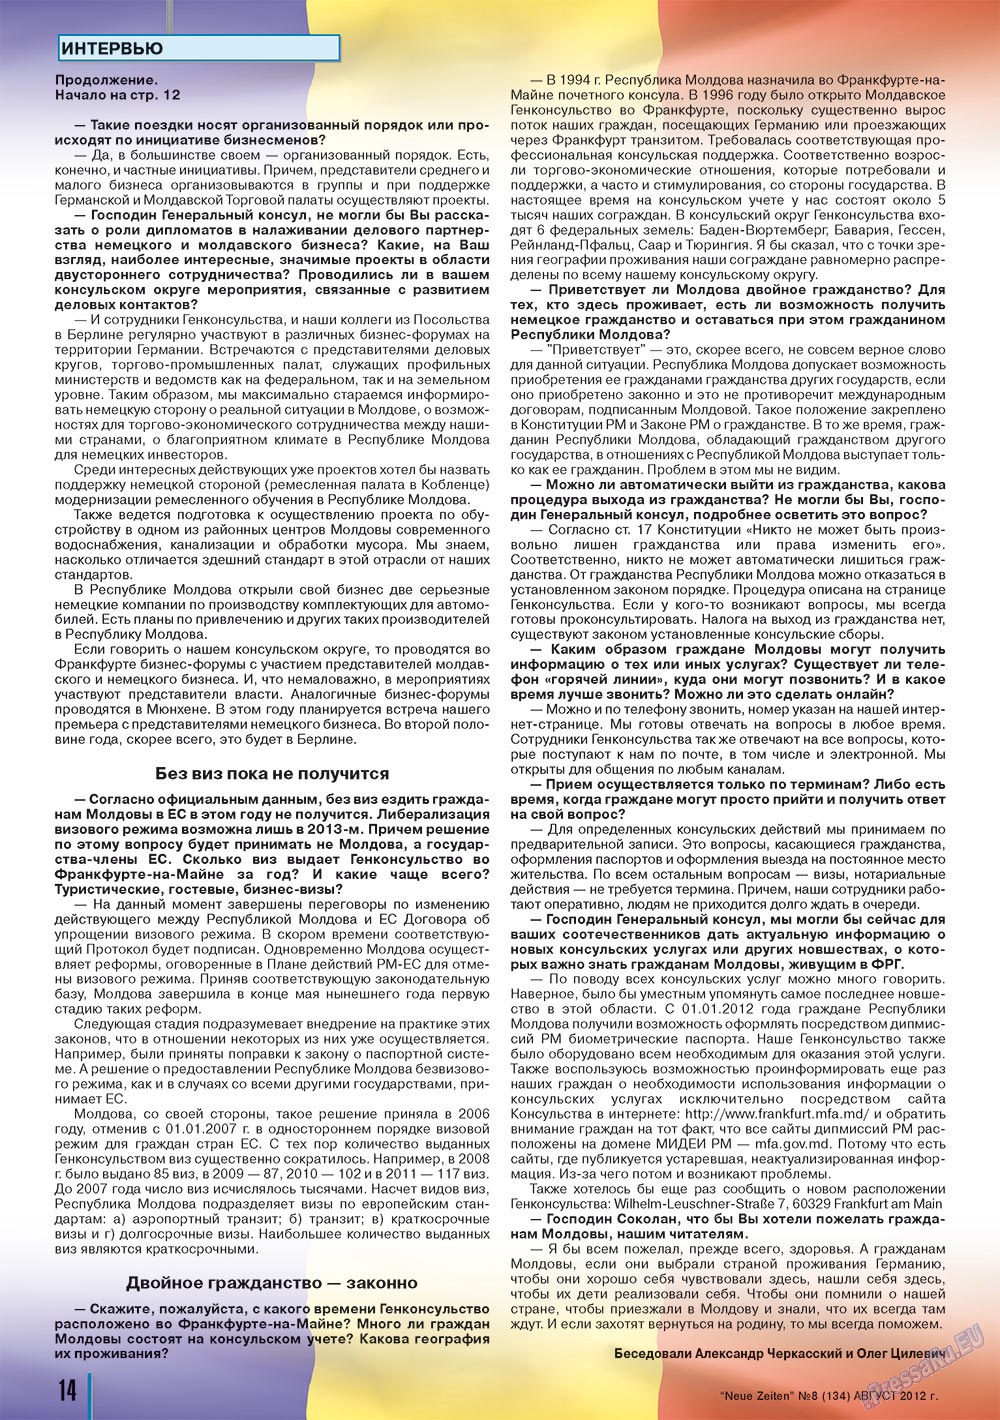 Neue Zeiten (журнал). 2012 год, номер 8, стр. 14